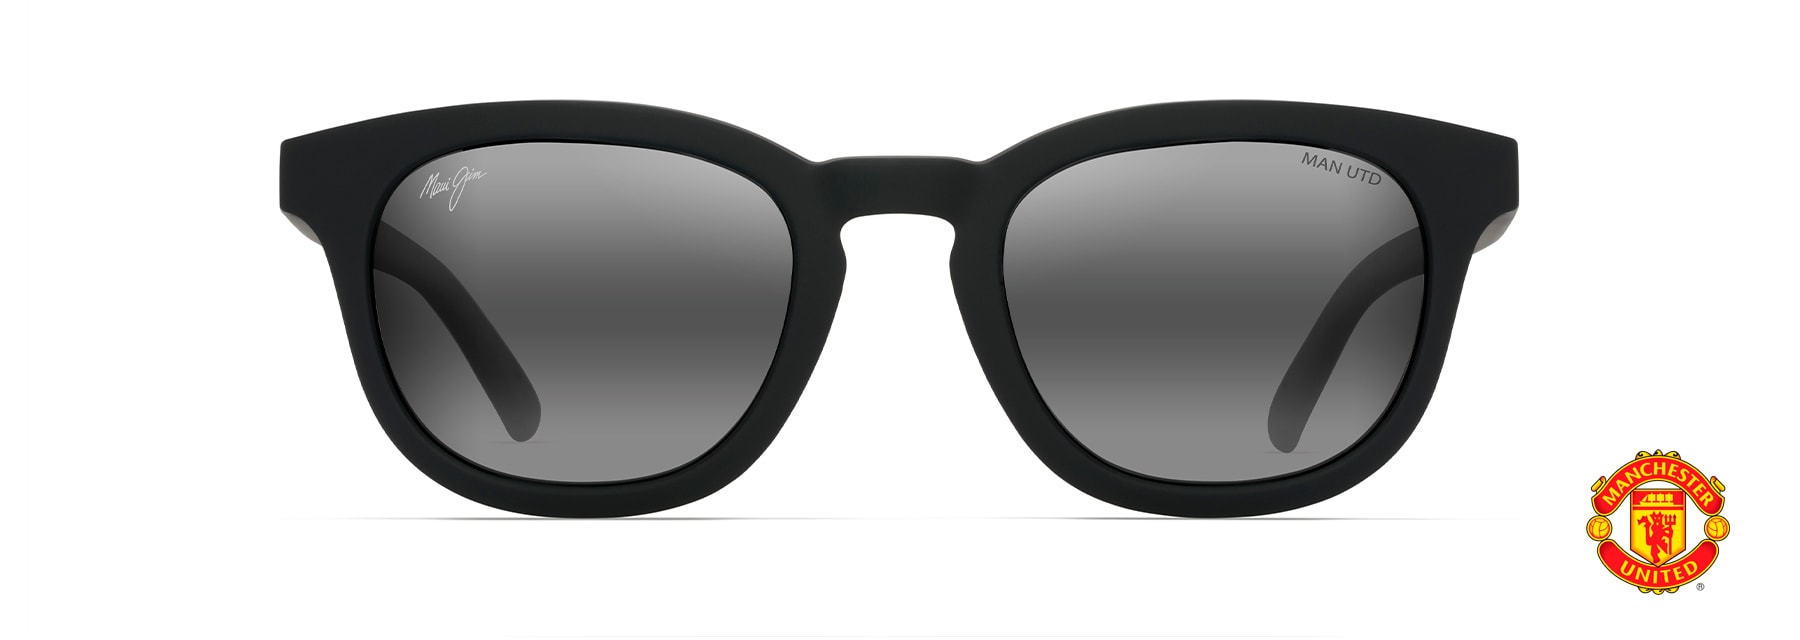 Koko Head Polarized Sunglasses | Maui Jim®